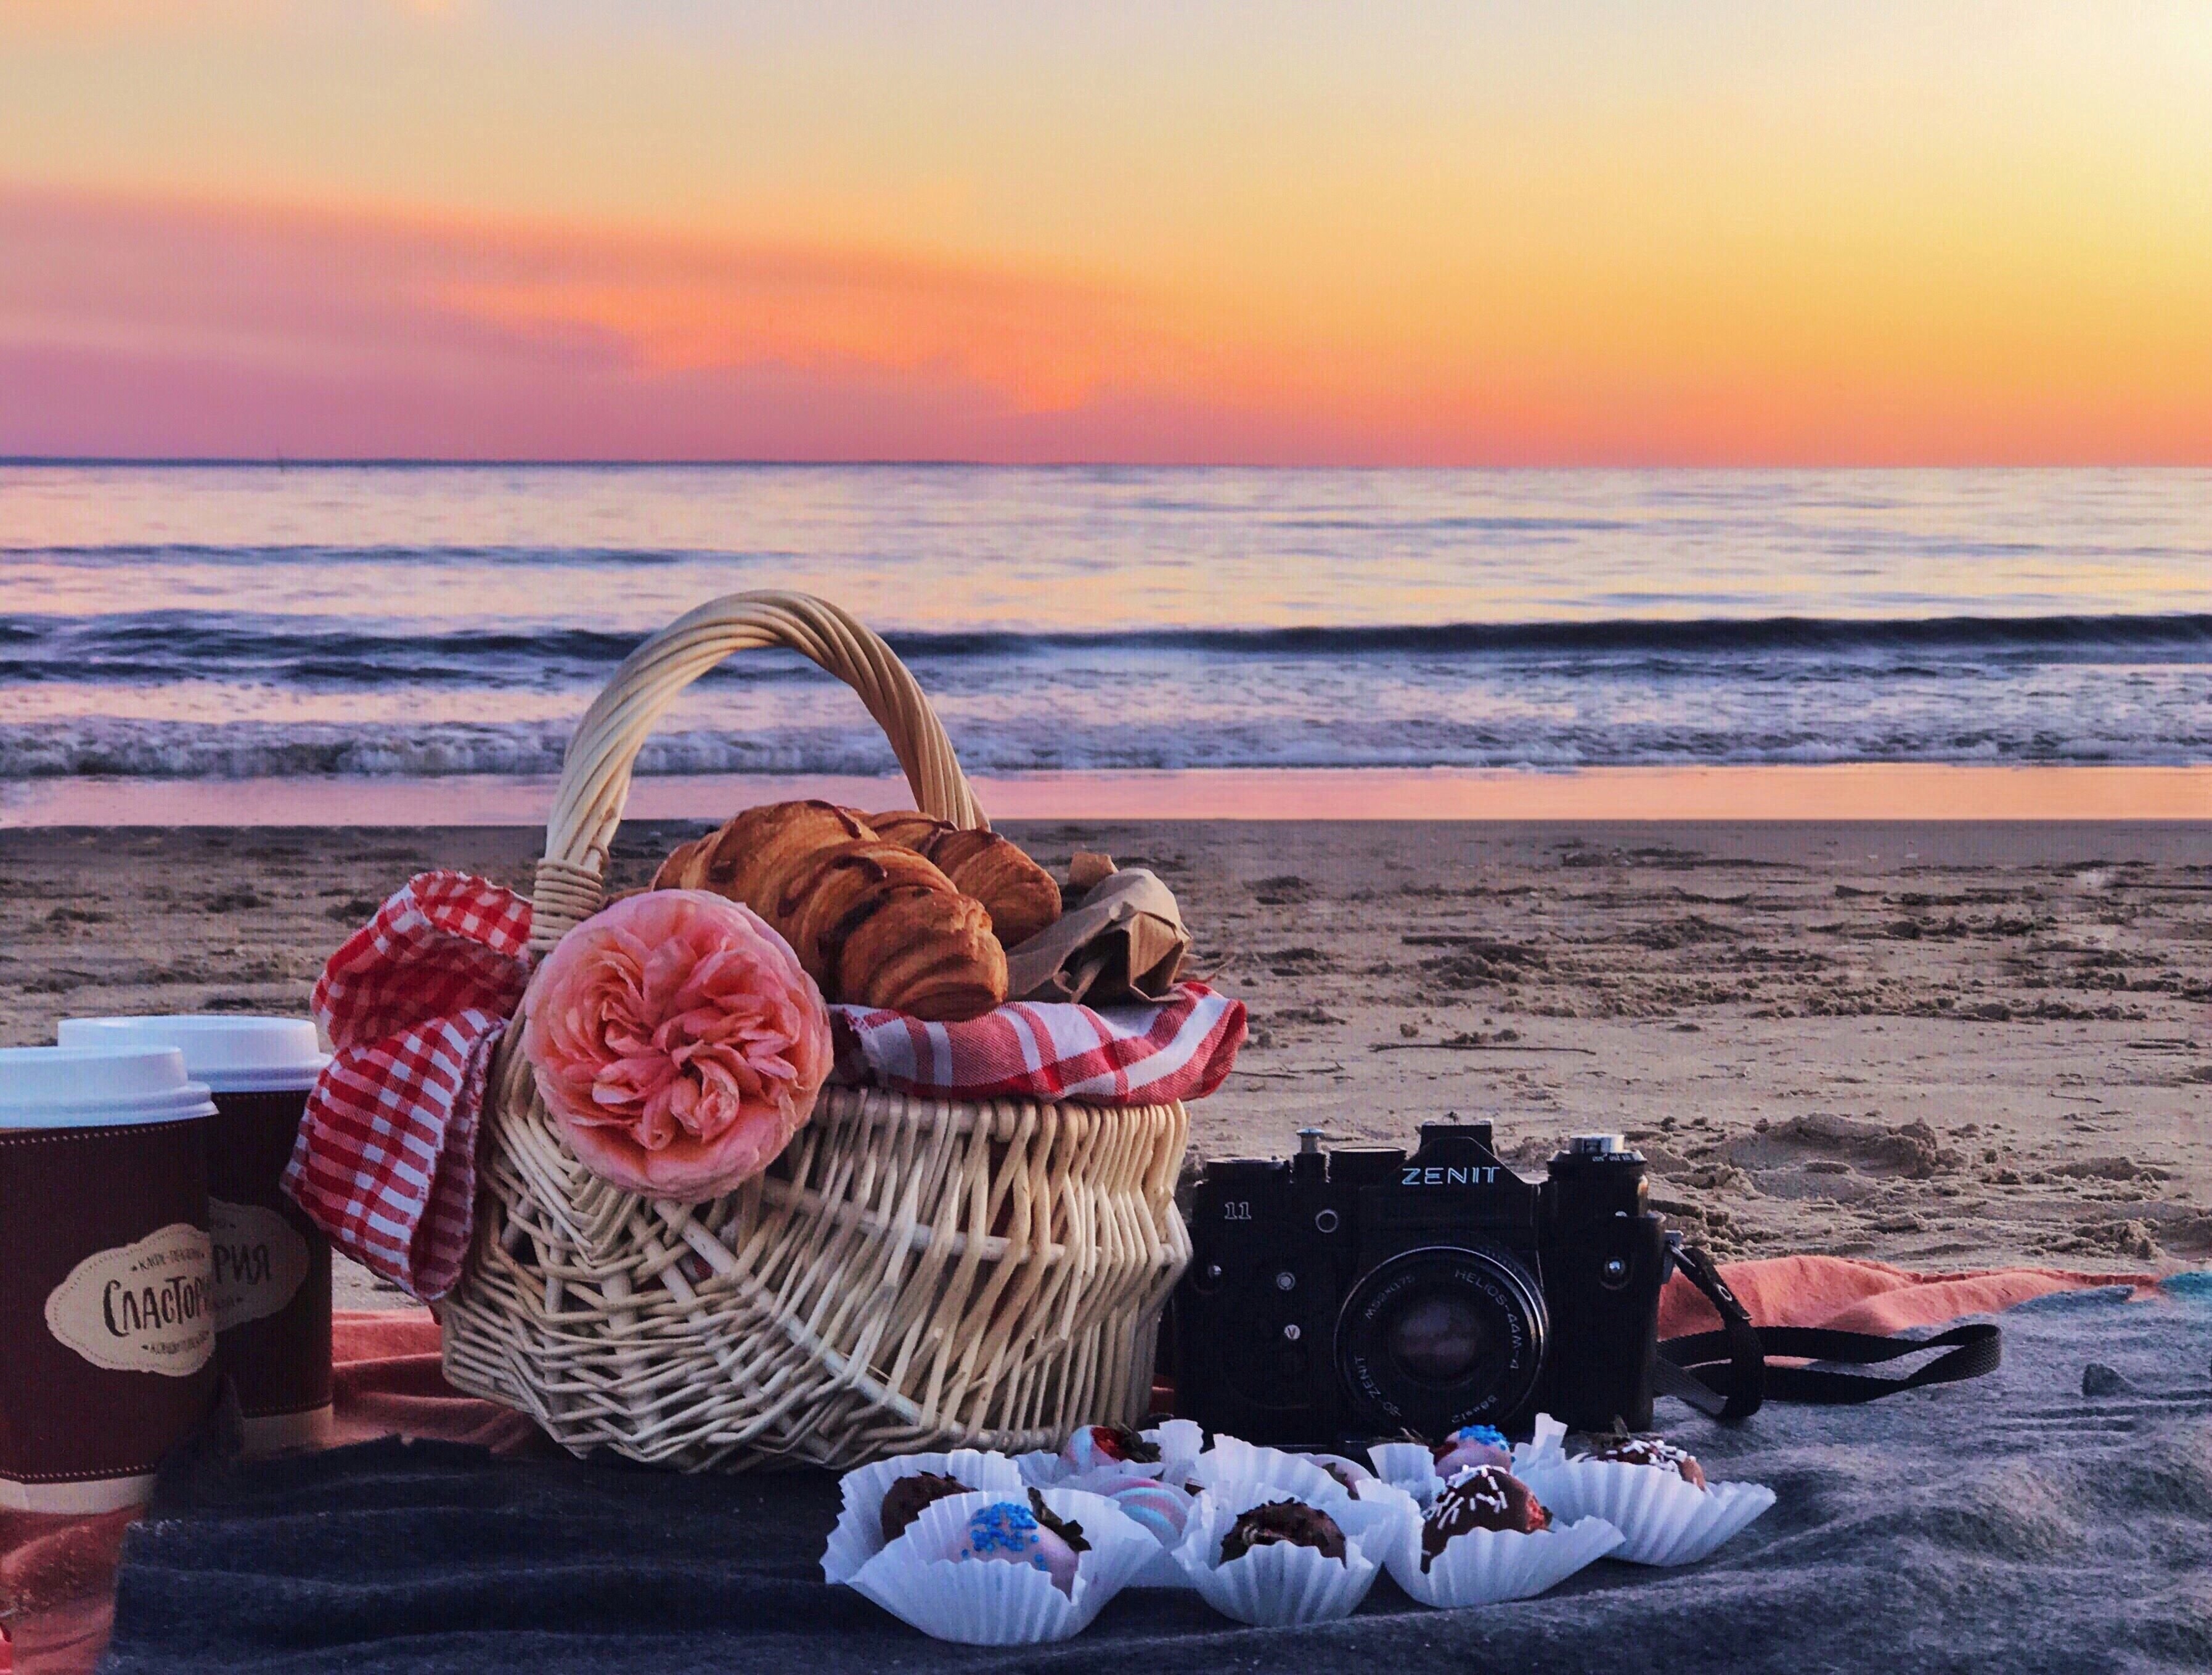 Красивая картинка море утро. Пикник на берегу моря. Пикник на море фотосессия. Лето море закат. Пикник на берегу моря закат.